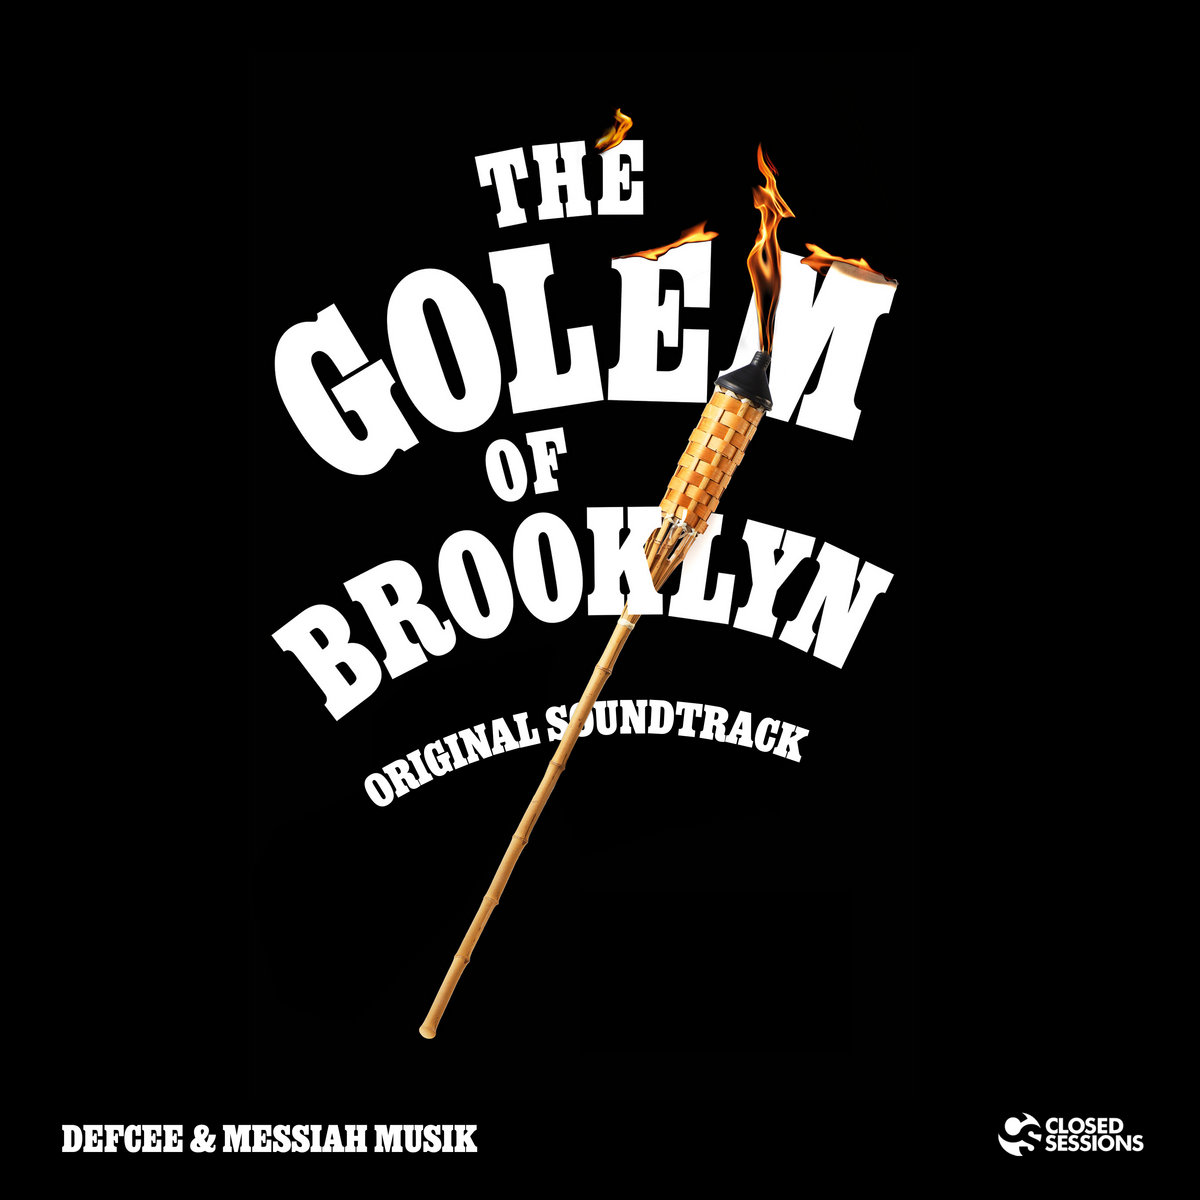 The_golem_of_brooklyn_original_soundtrack